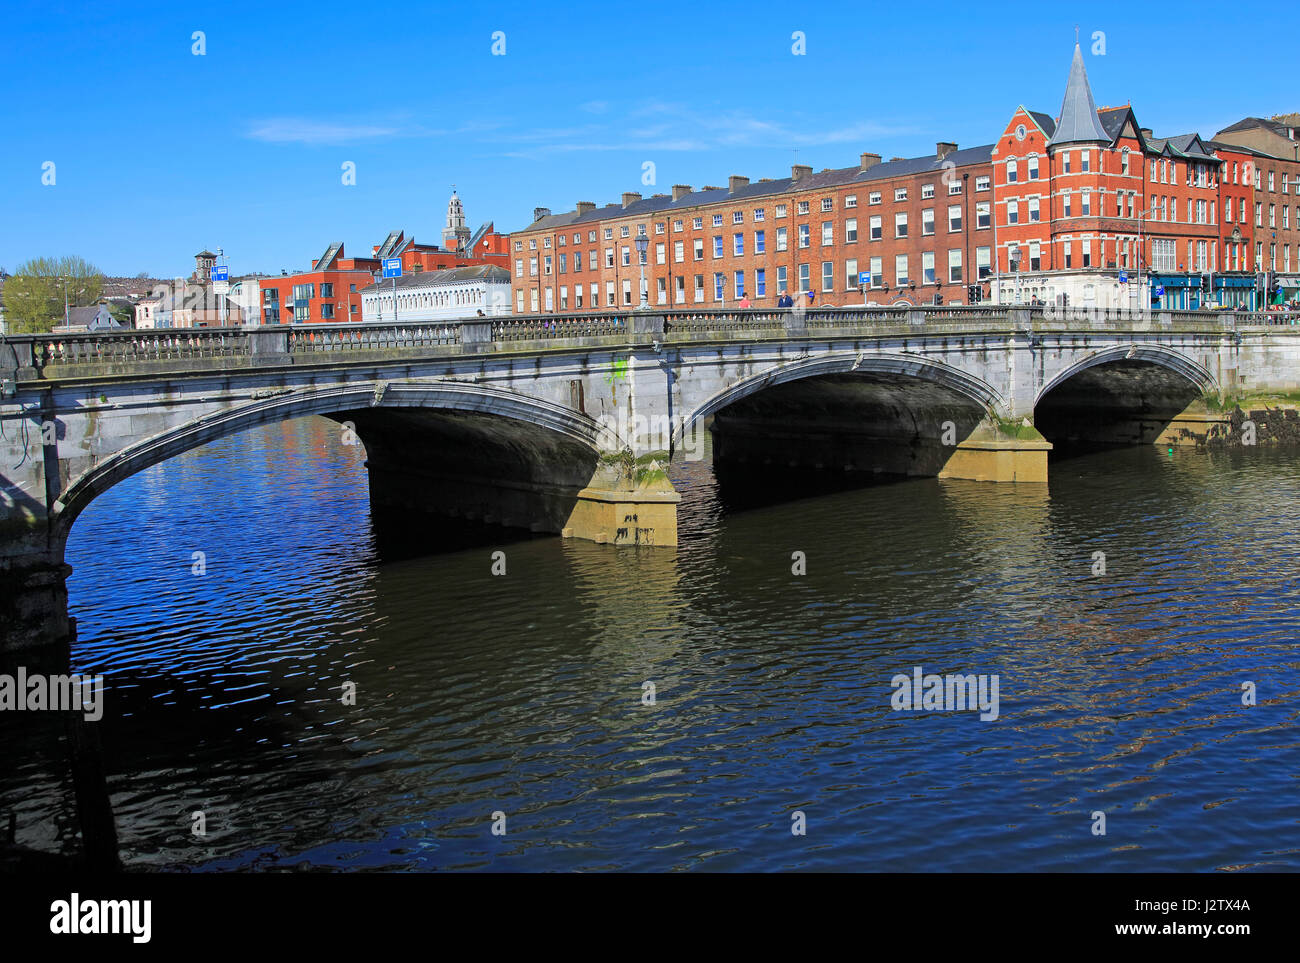 Brücke über den River Lee, Stadt Cork, County Cork, Irland, Republik Irland Stockfoto